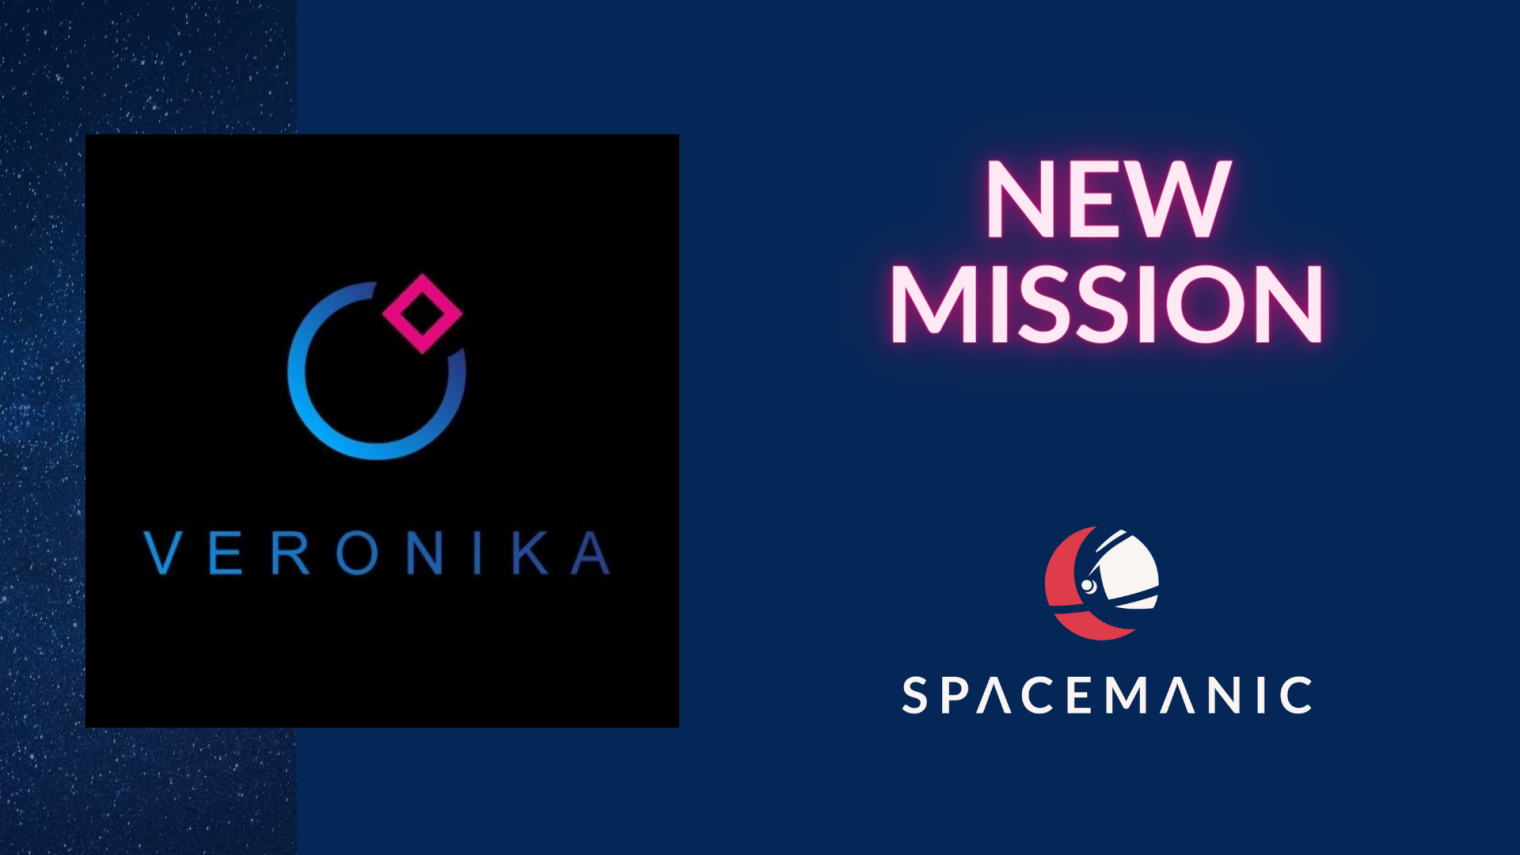 New Mission: Veronika